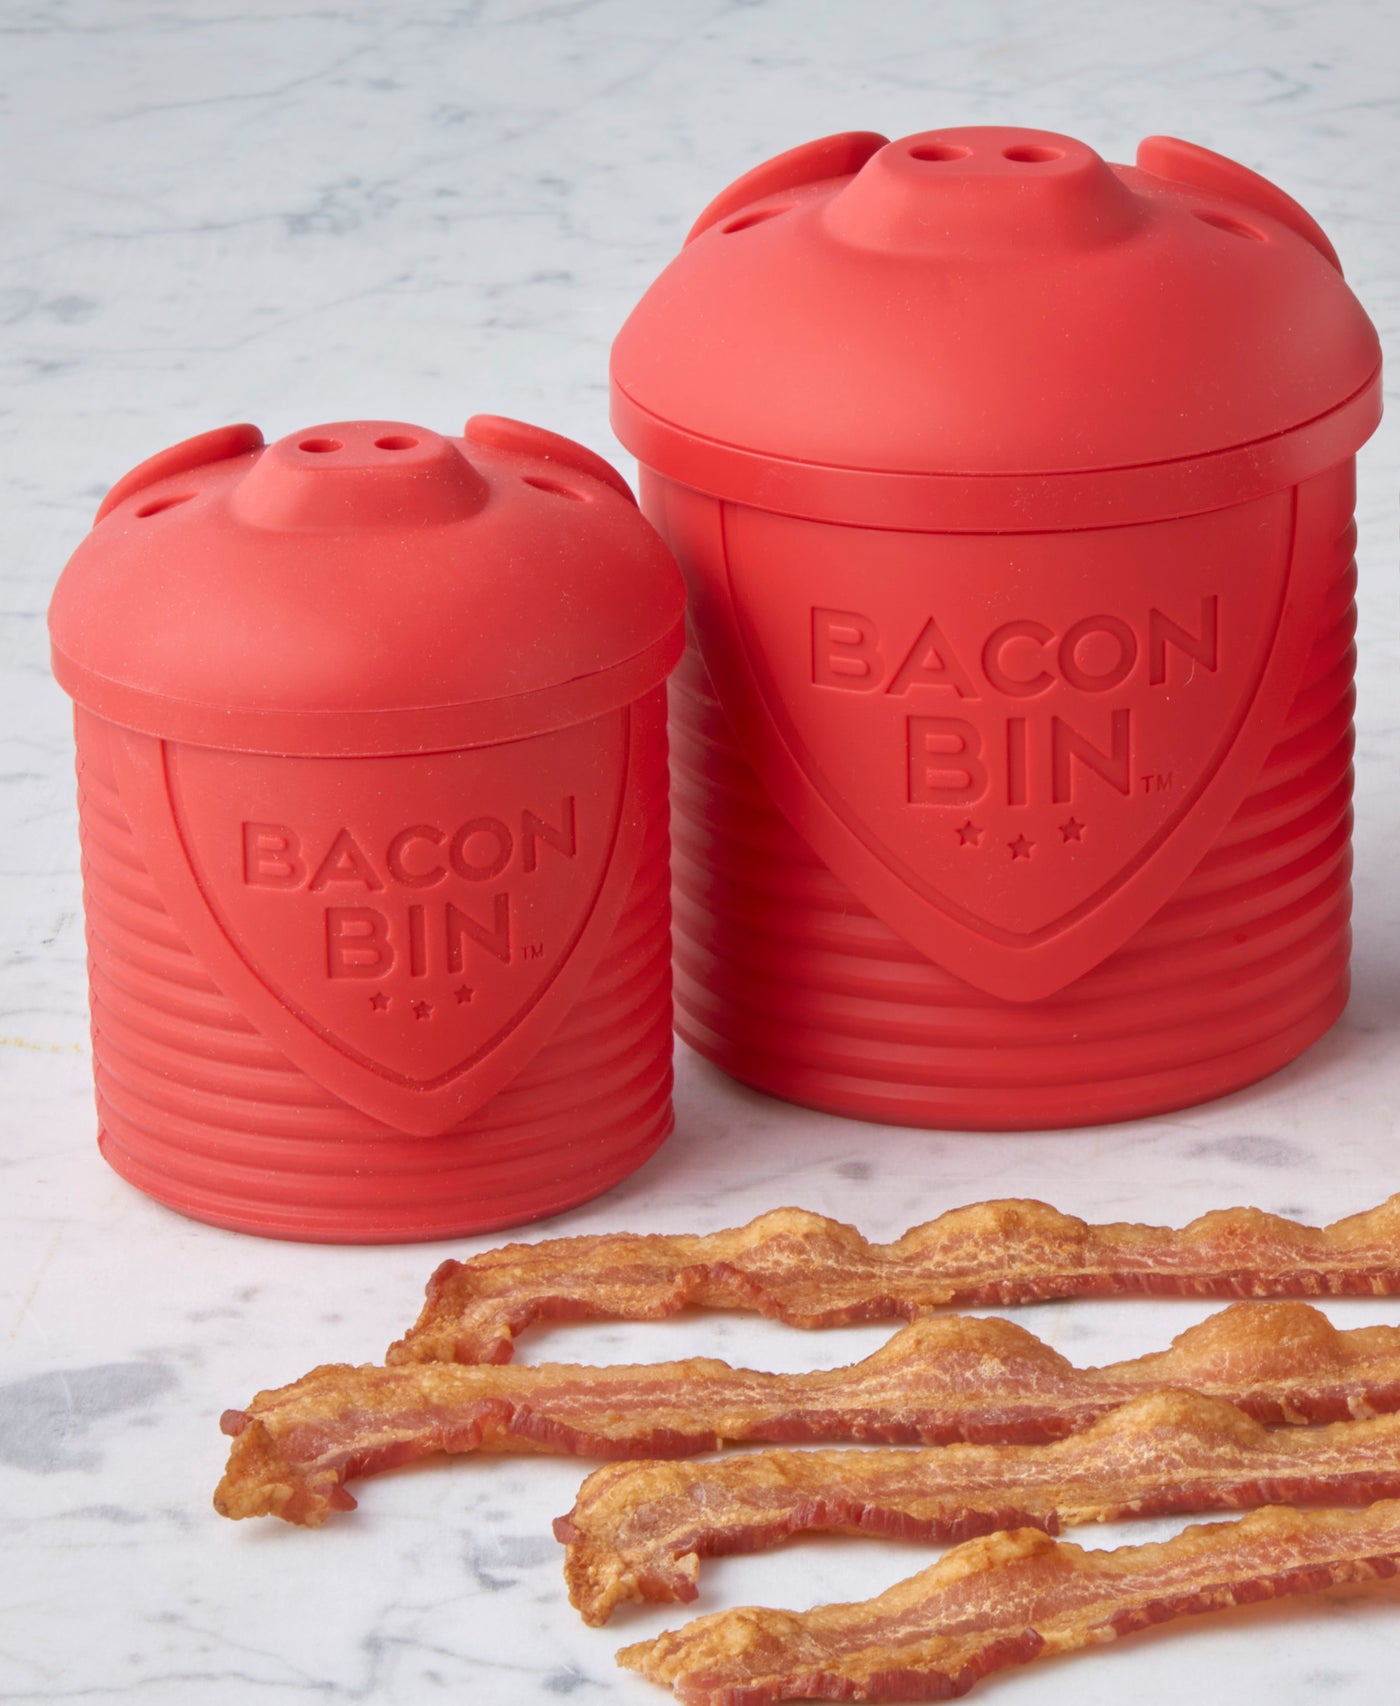 Talisman Designs Silicone Bacon Bin XL Grease Container, 2 cup